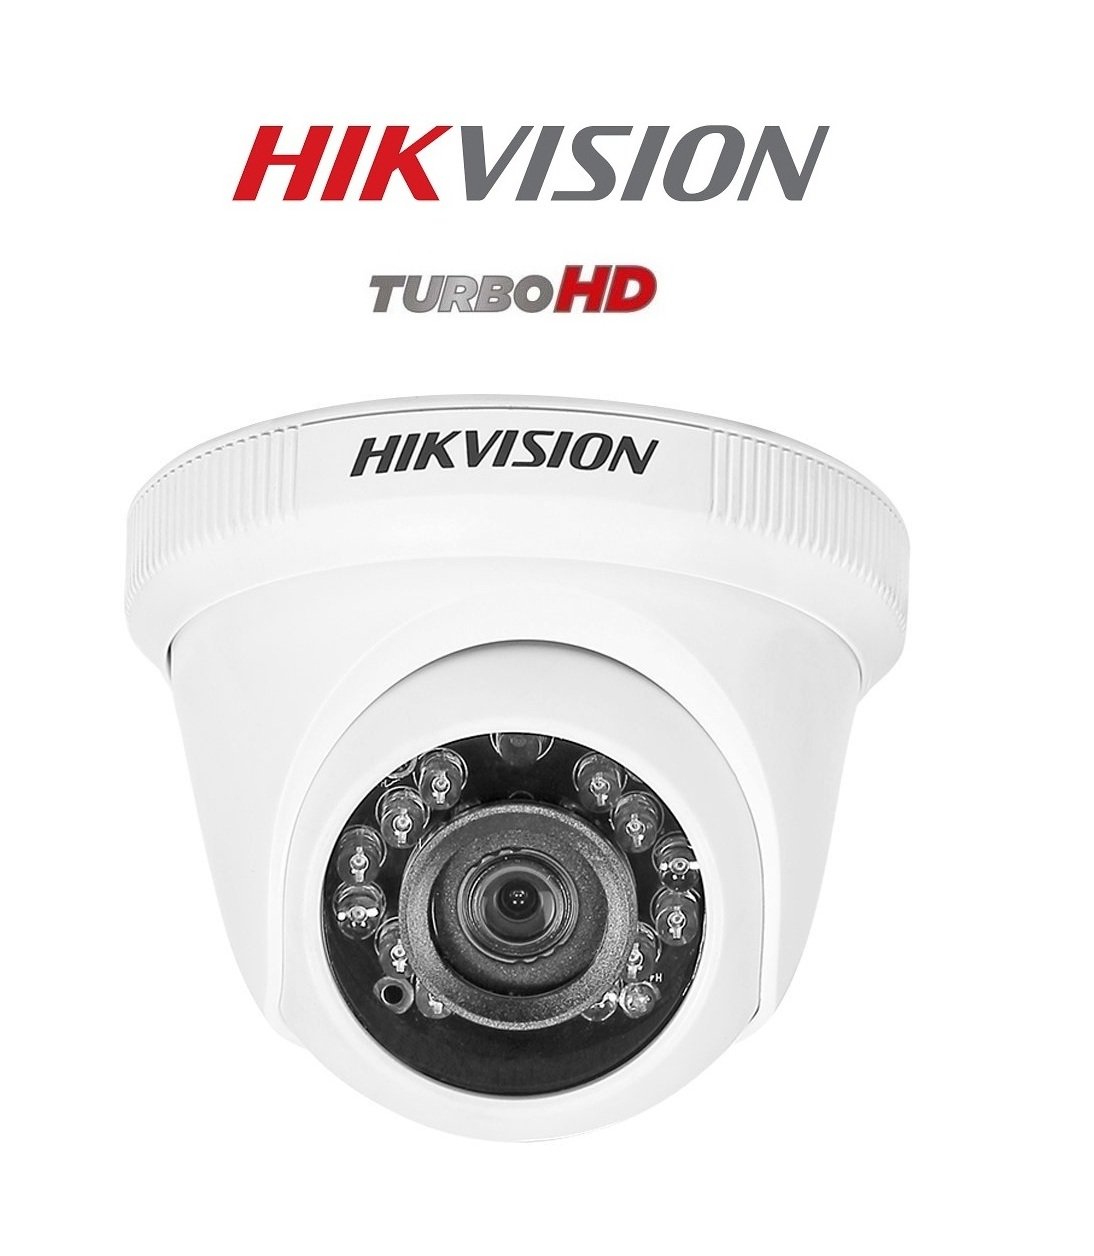 hikvision hd camera price